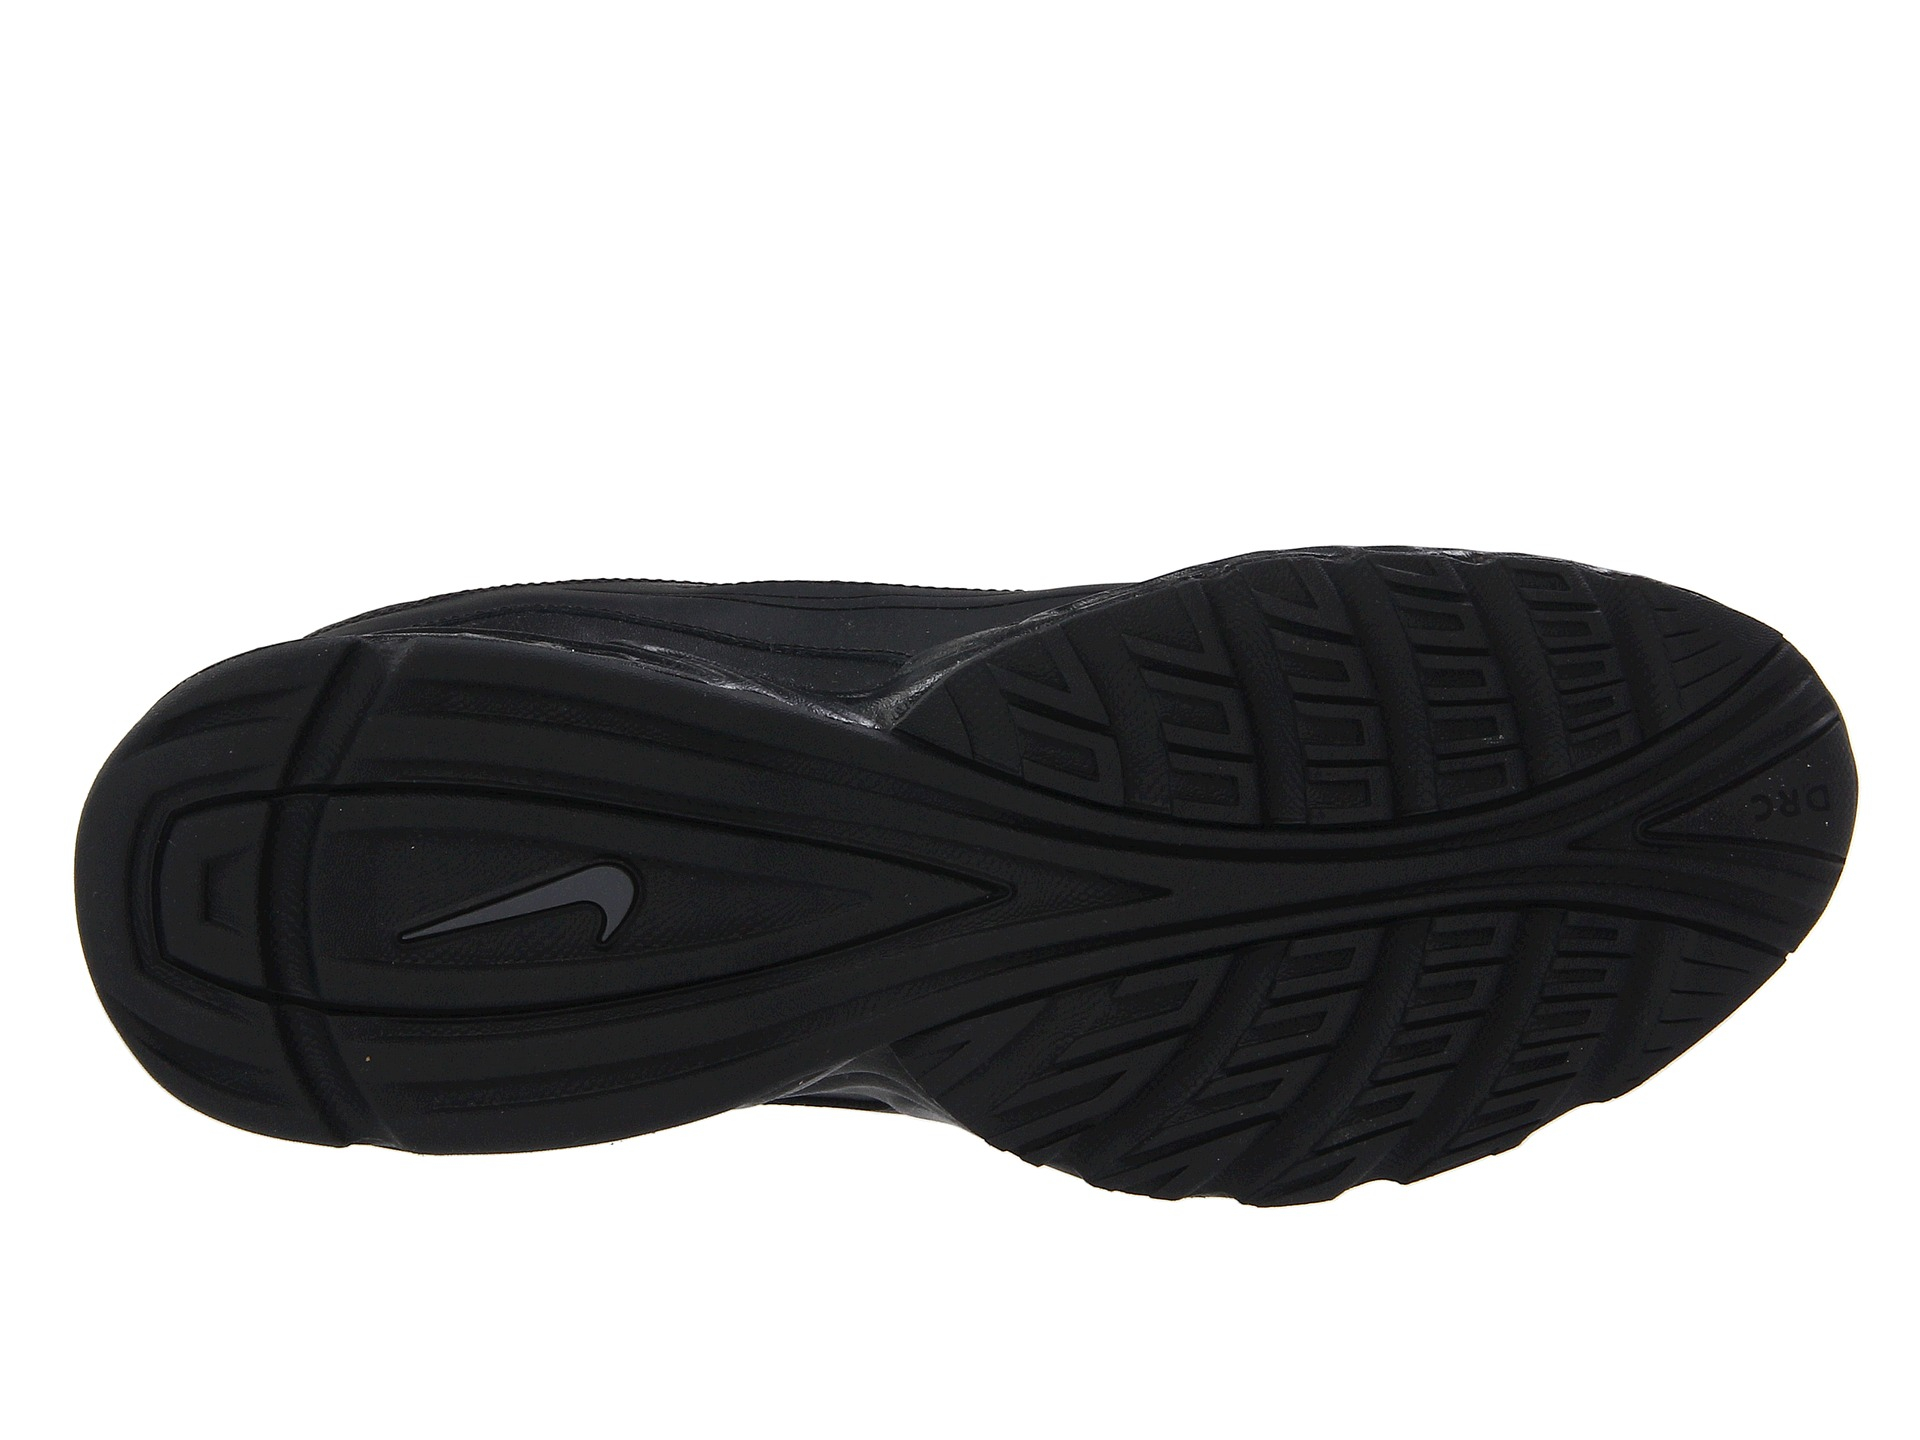 Nike View Iii in Black/Black (Black) for Men - Lyst